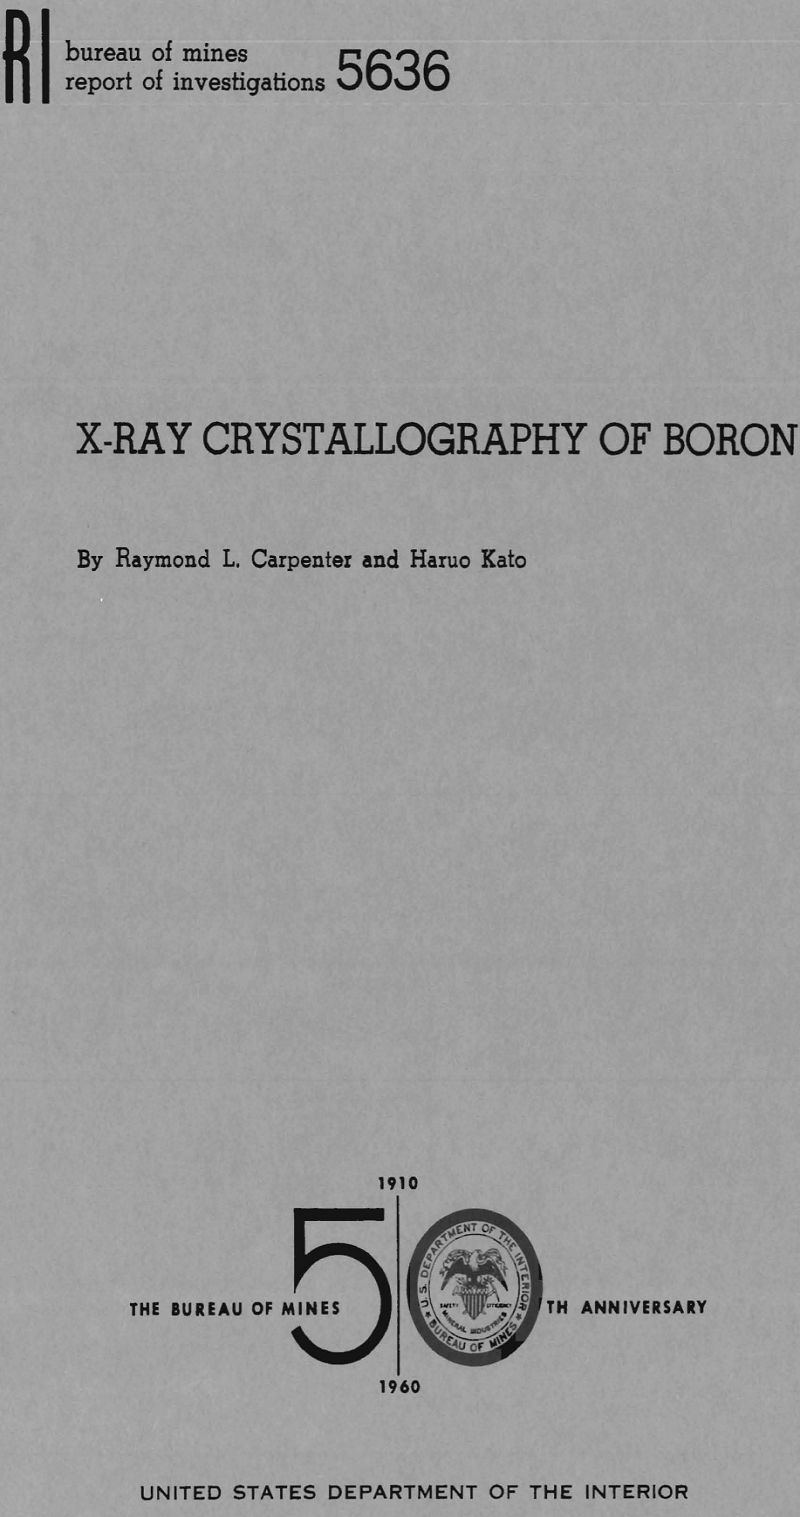 x-ray crystallography of boron